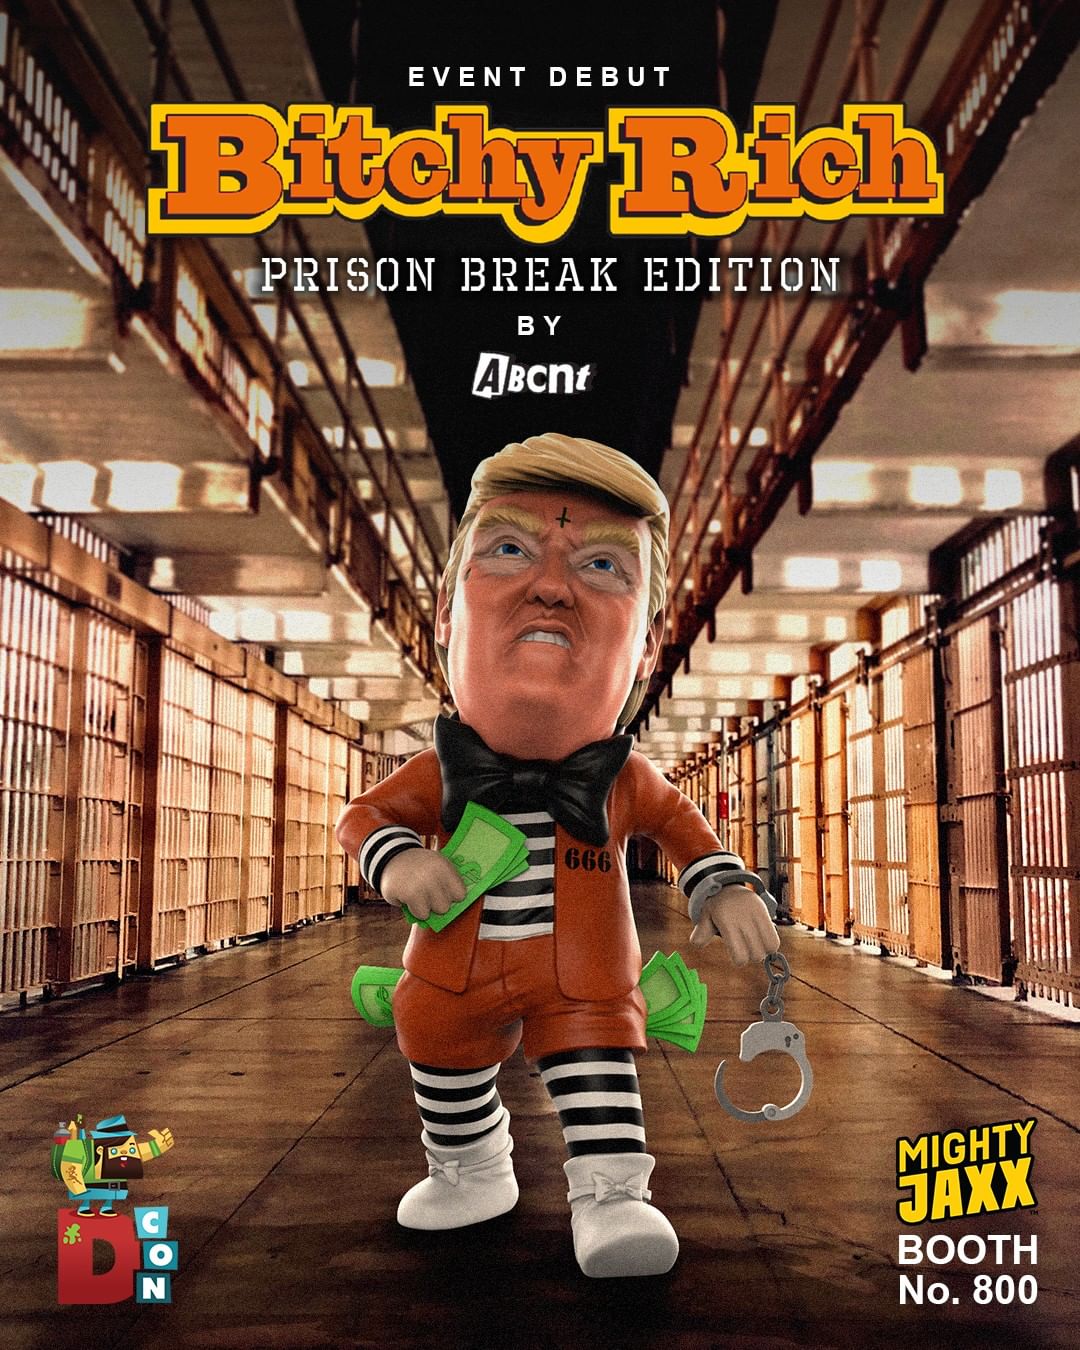 Bitchy Rich Prison Break Edition. ABCNT x Mighty Jaxx. Debuts at DesignerCon 2019.